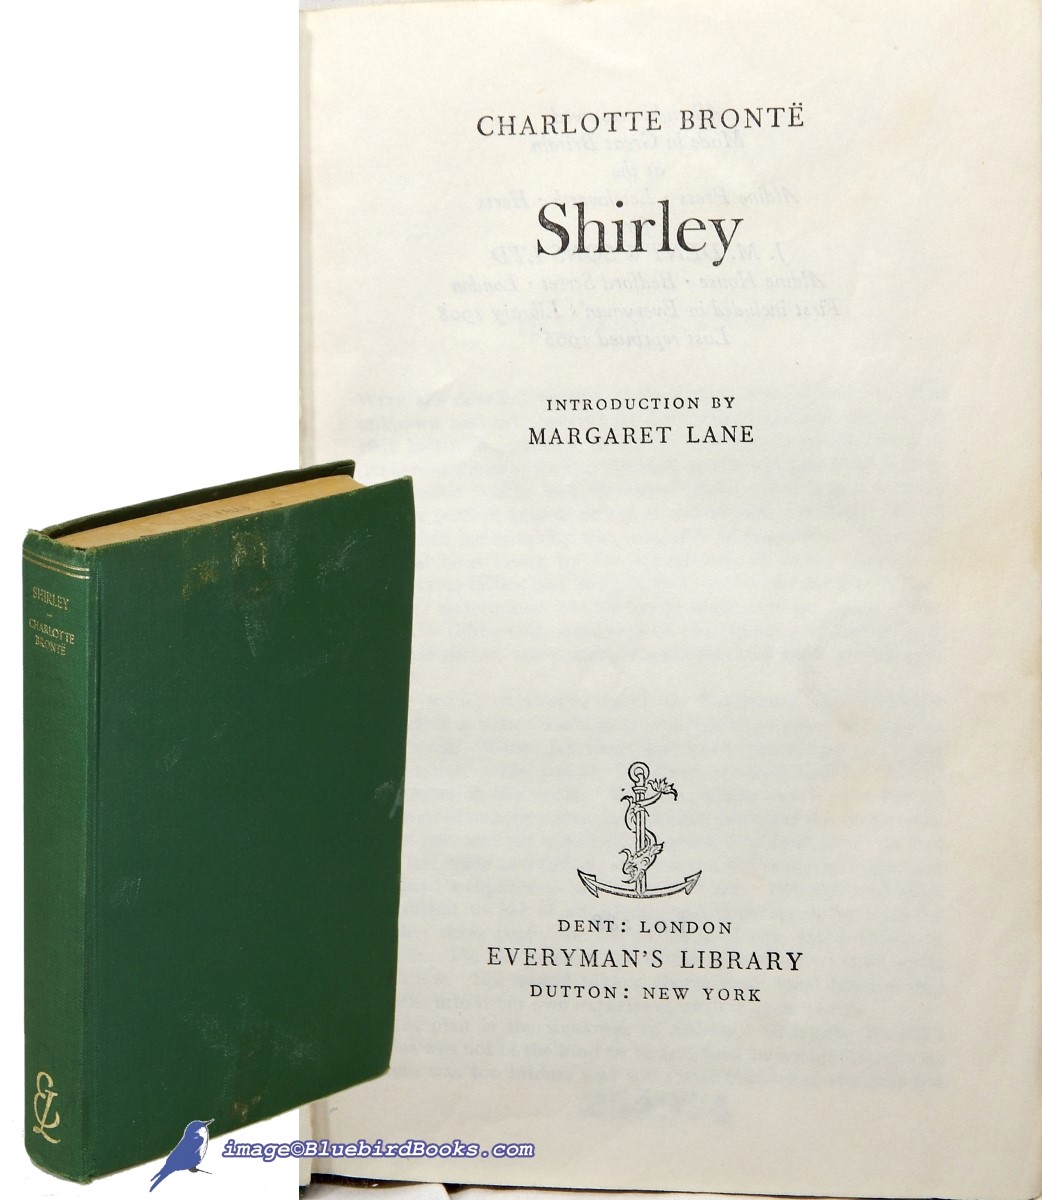 BRONT, CHARLOTTE - Shirley (Everyman's Library #288)